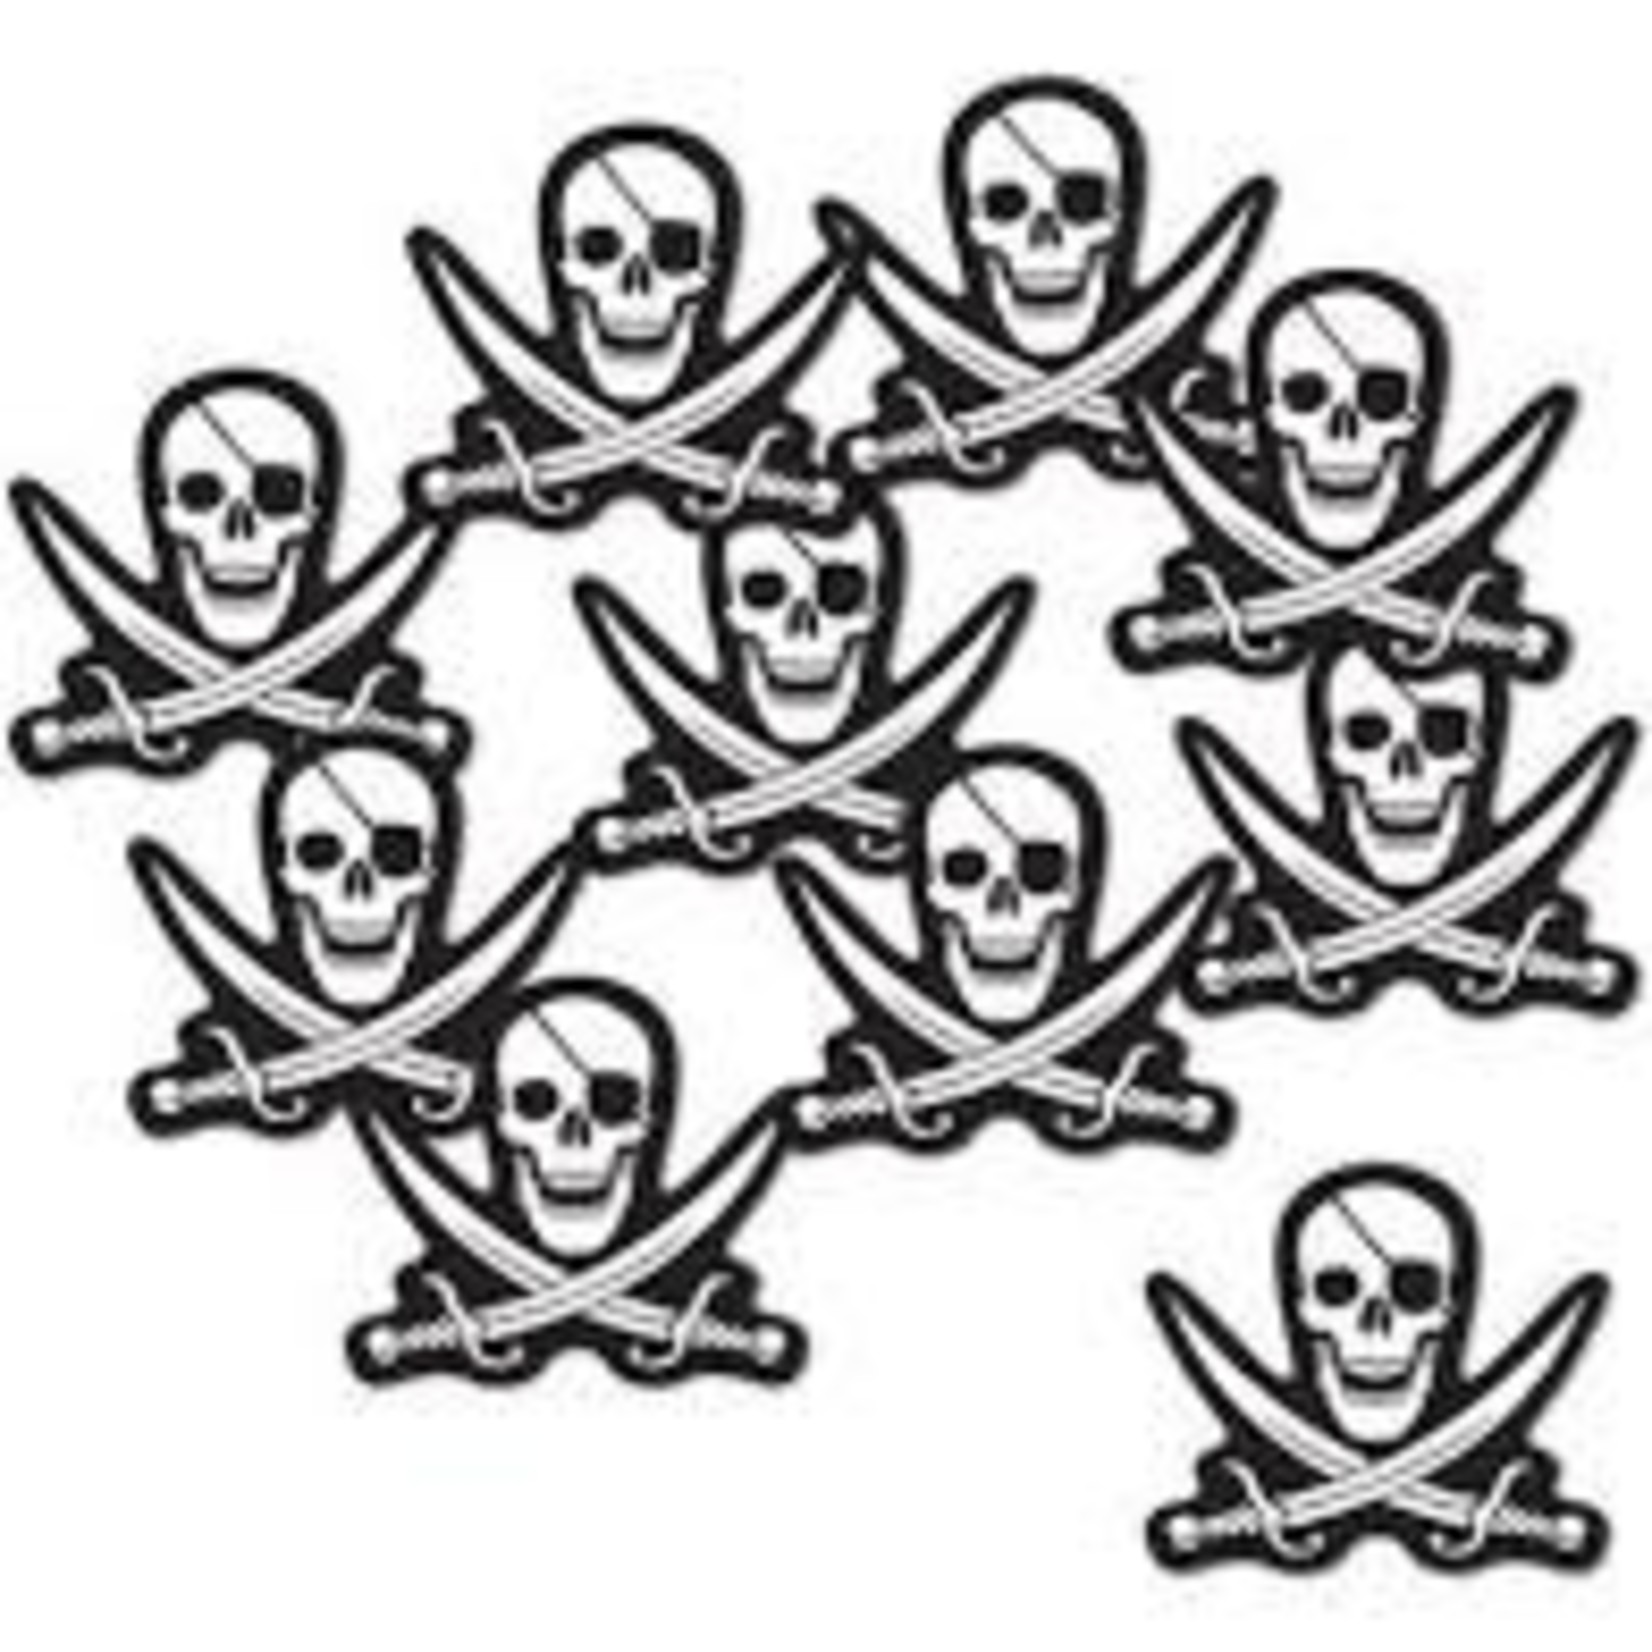 Beistle Pirate Skull & Crossbones Cutouts - 10ct.